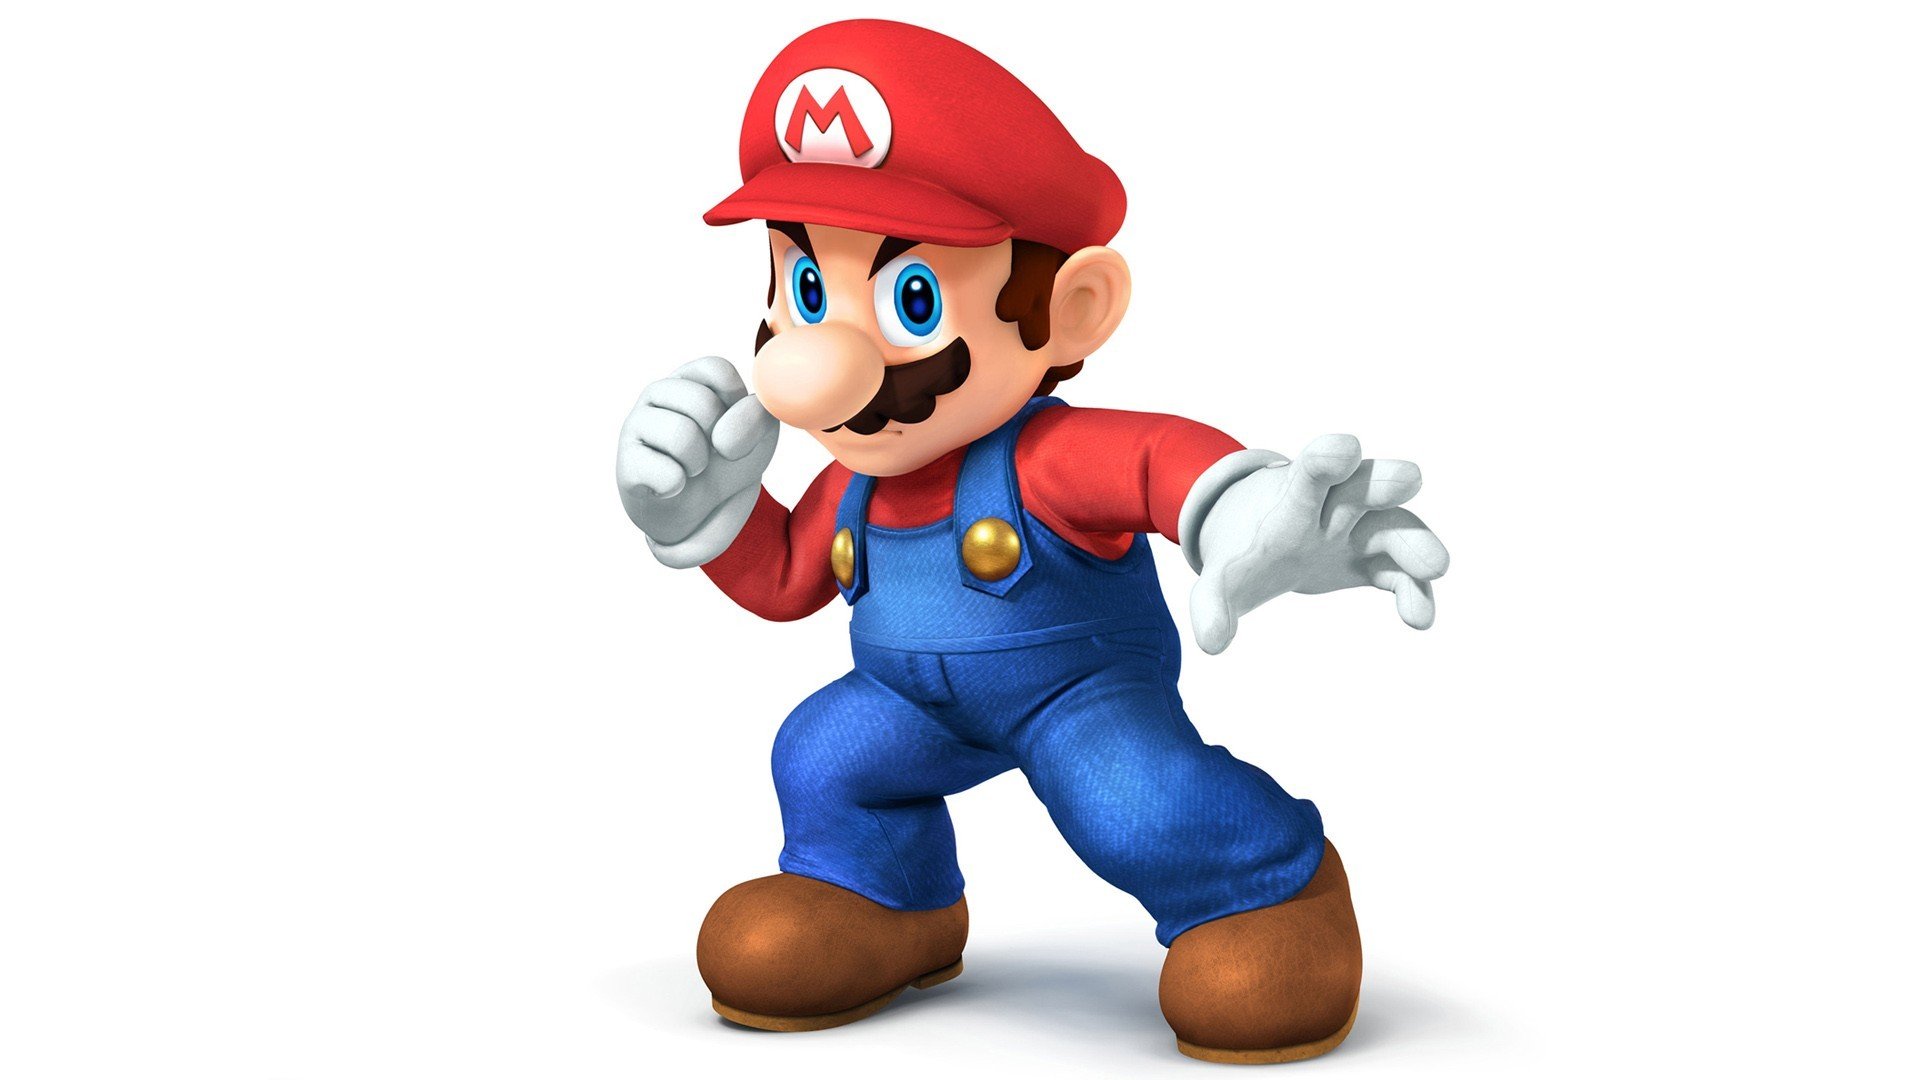 Mario bros theme. Марио (персонаж игр). Супер Марио БРОС персонажи. Марио герой компьютерной игры. Марио из супер Марио БРОС.